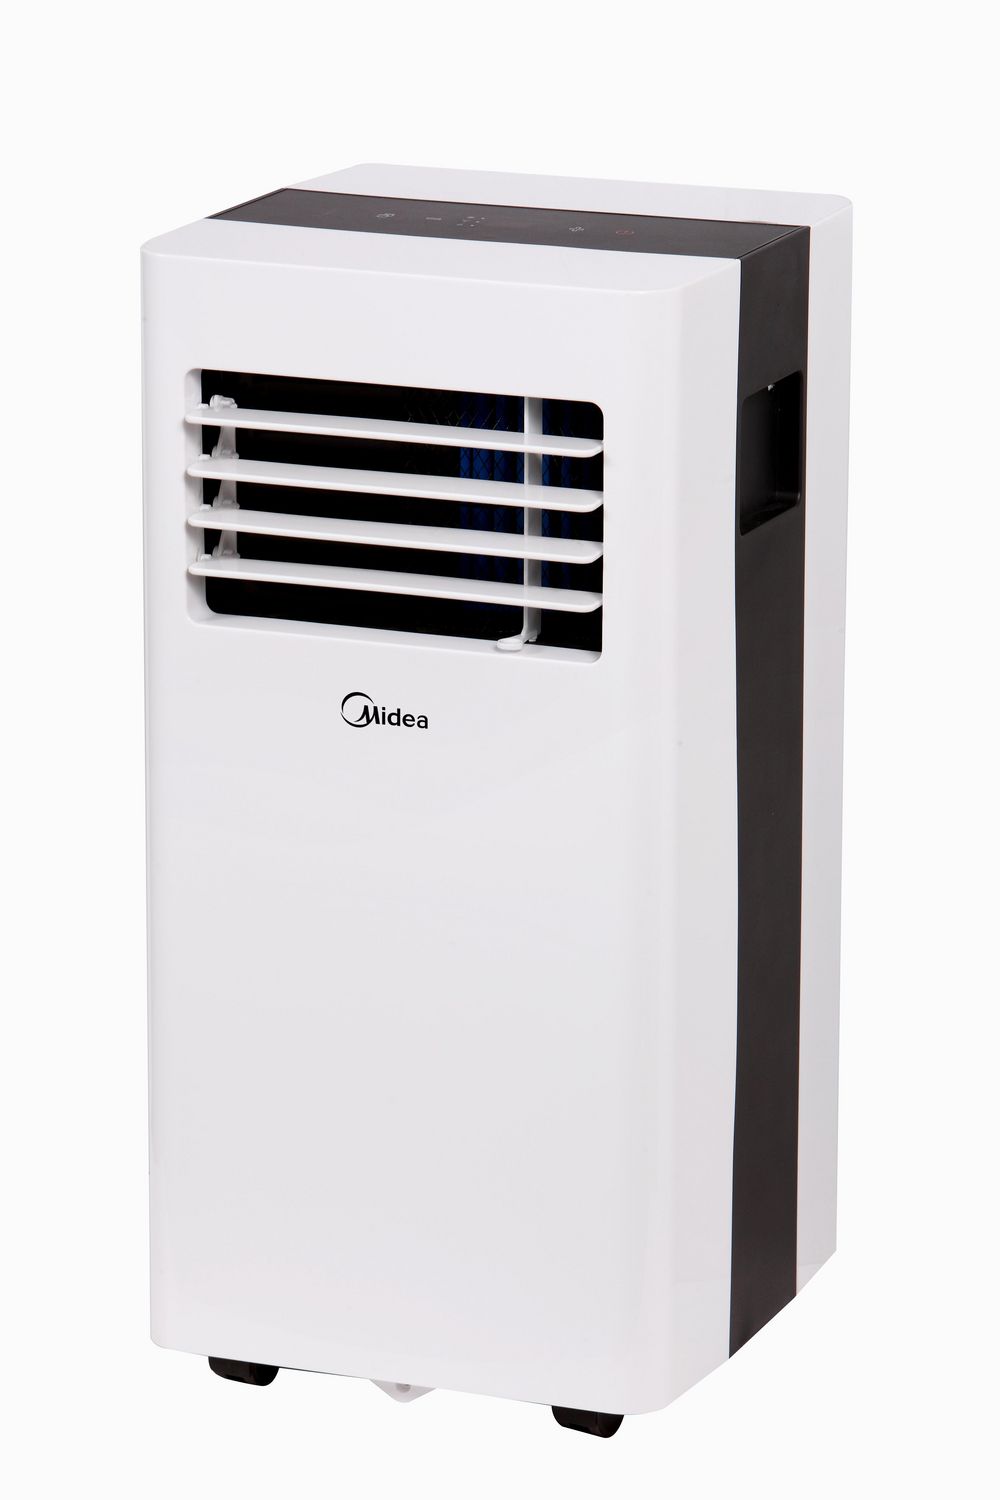 Midea 8,000 BTU 3-in-1 Portable Air Conditioner, Dehumidifier, Fan